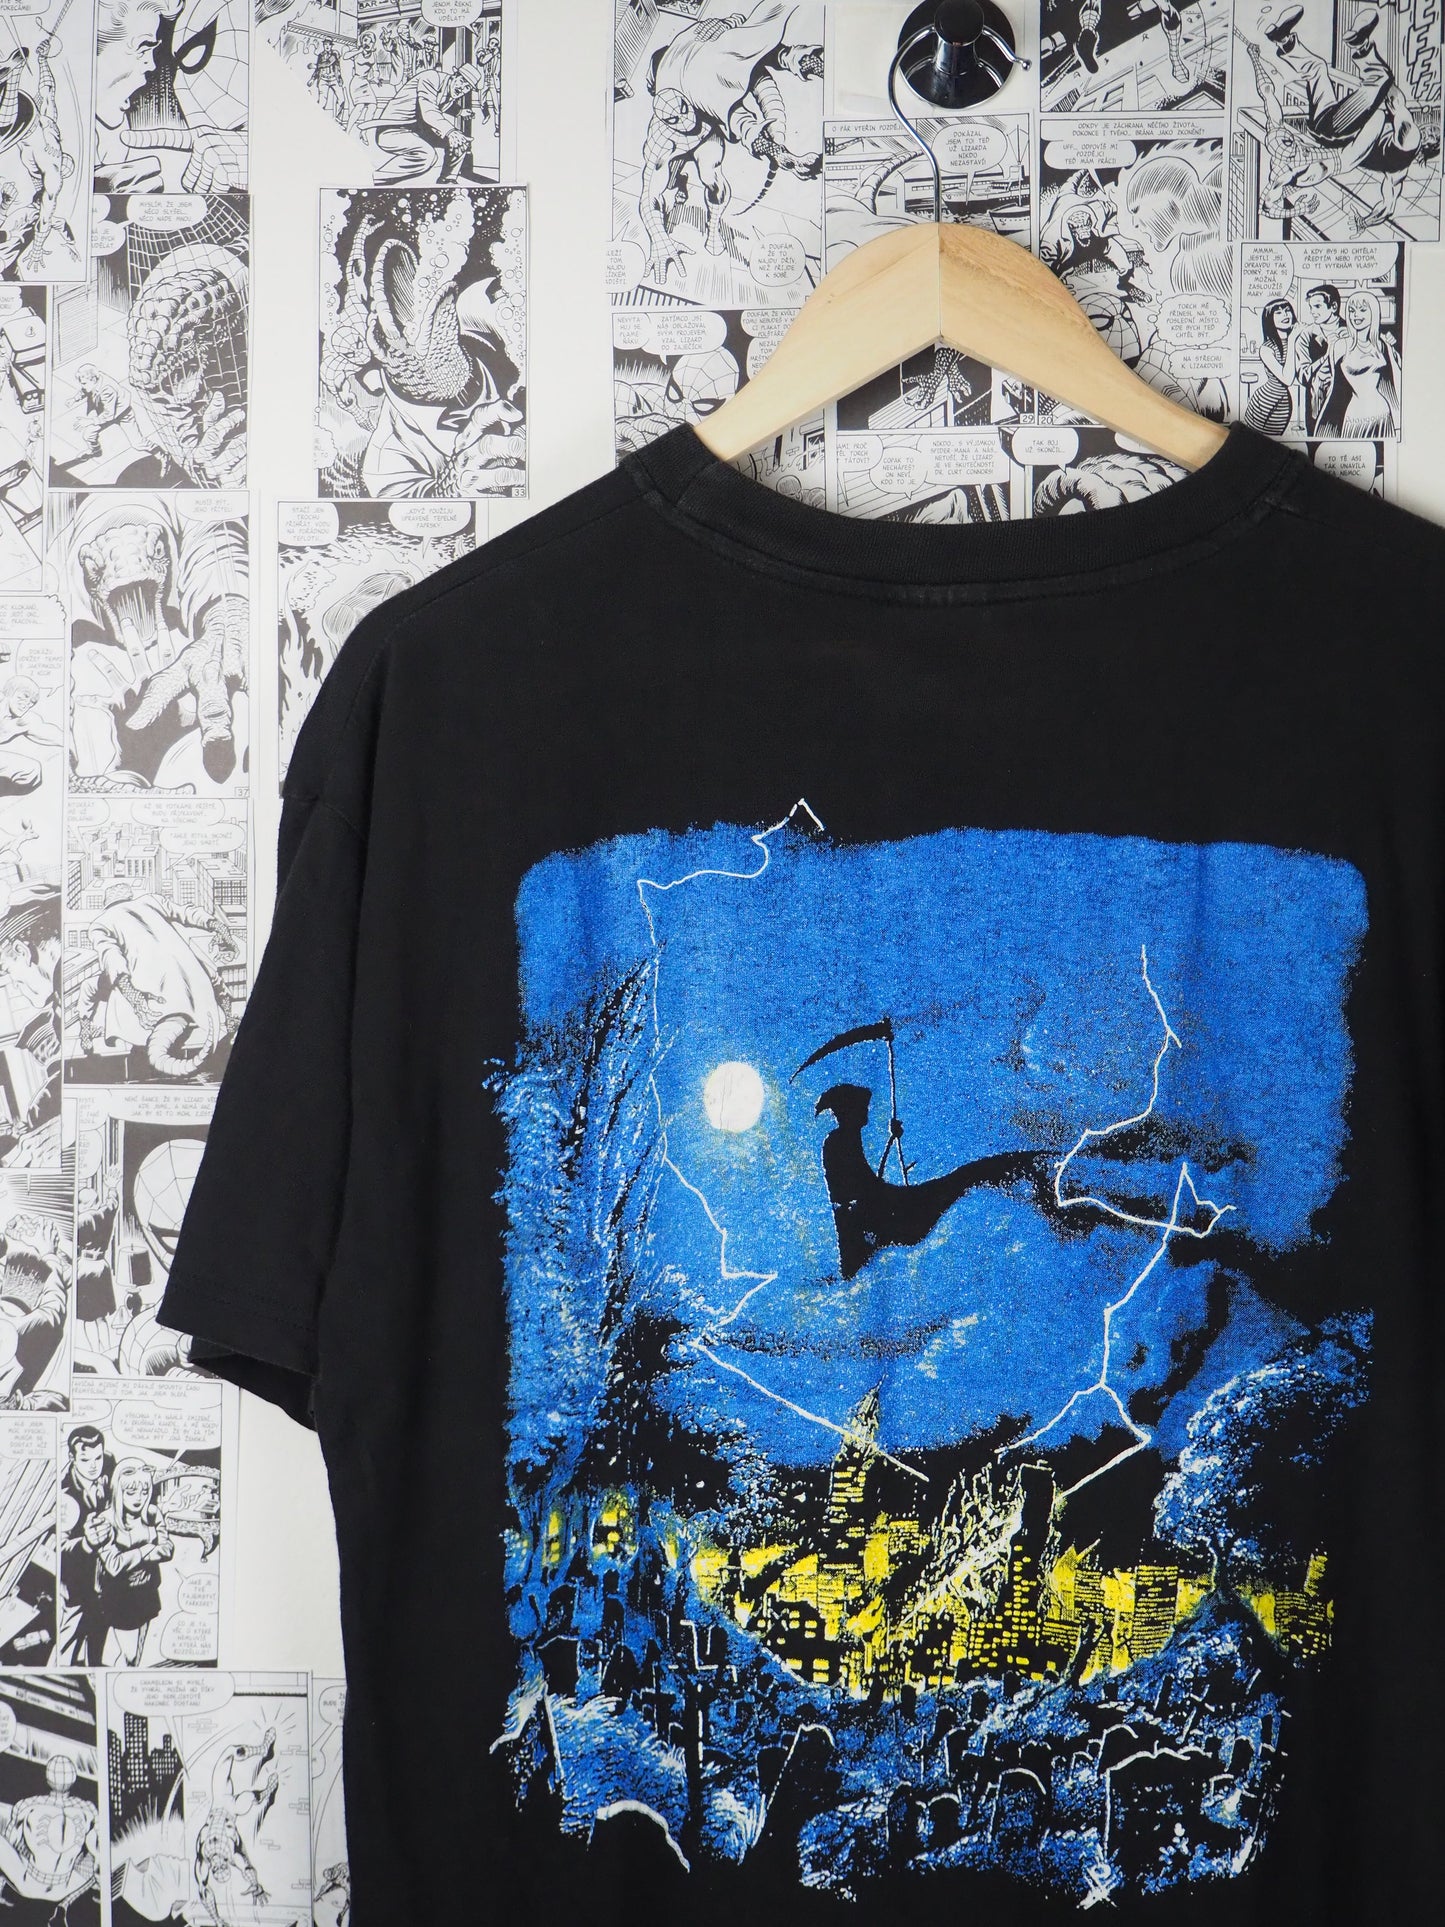 Vintage Iron Maiden "Live After Death" 90s t-shirt - size XL